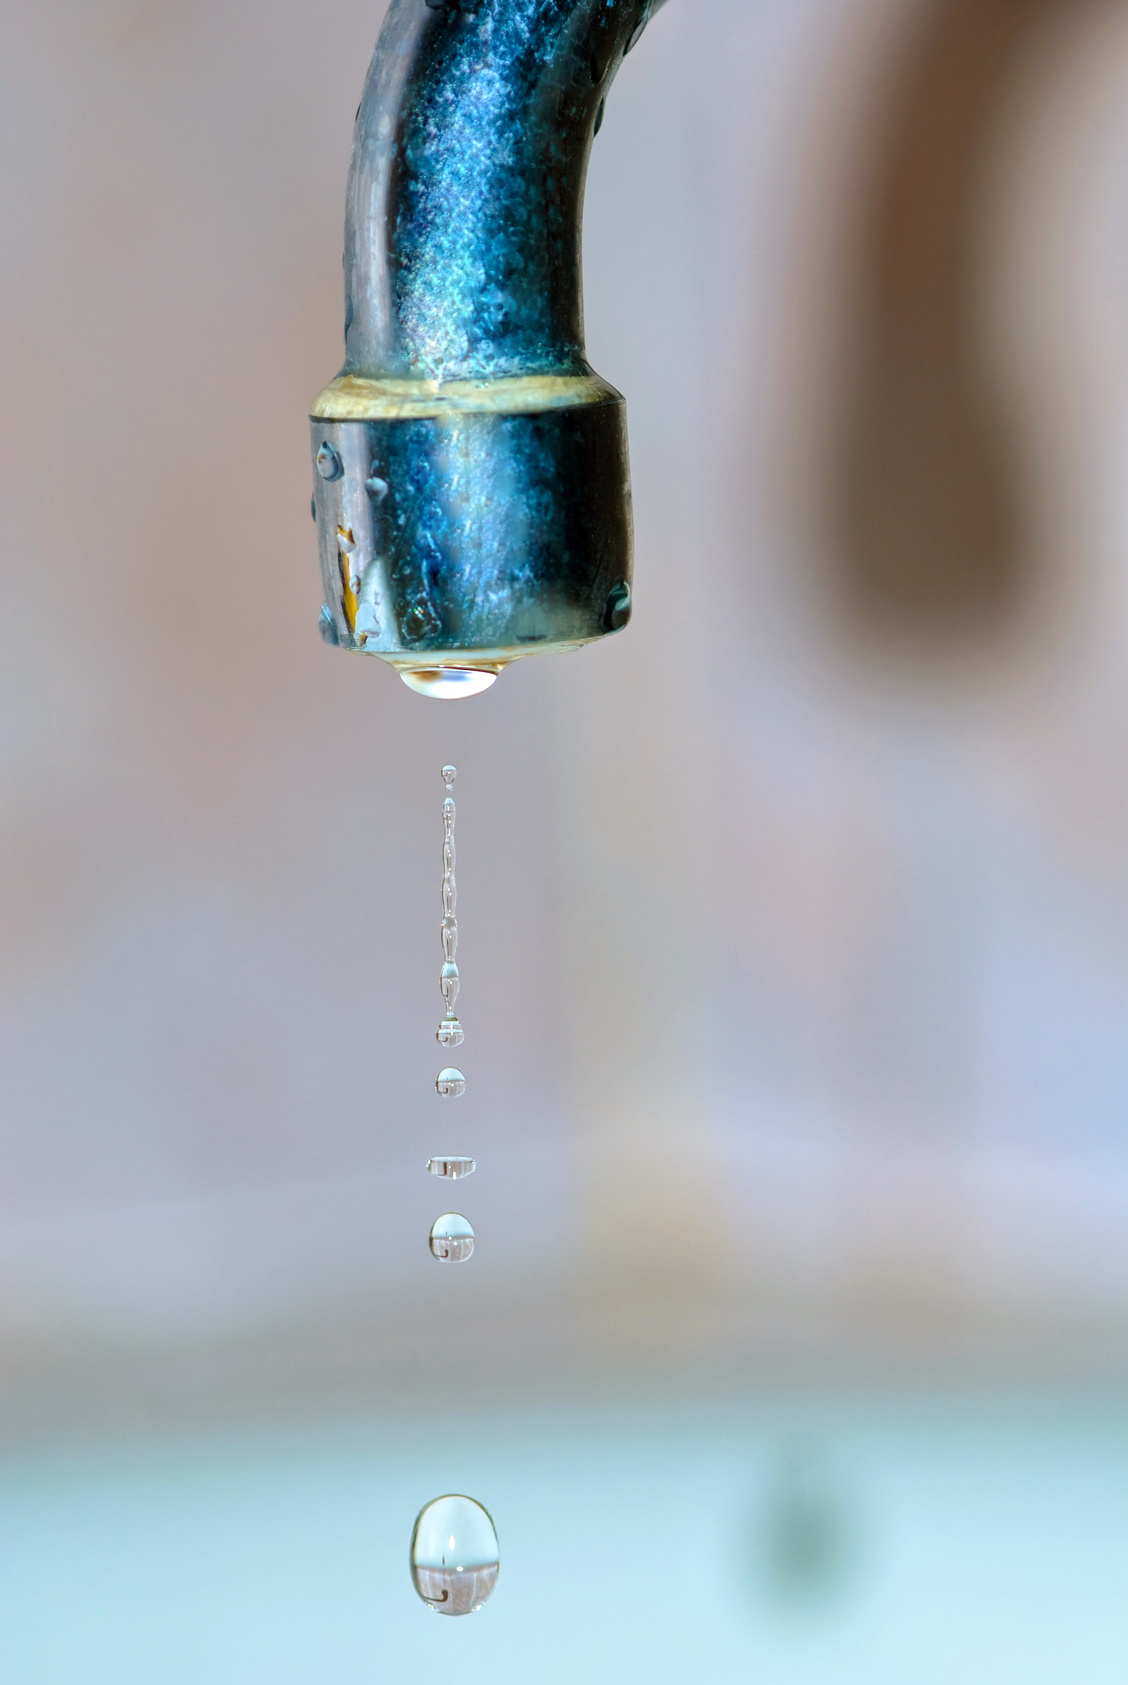 Community water fluoridation